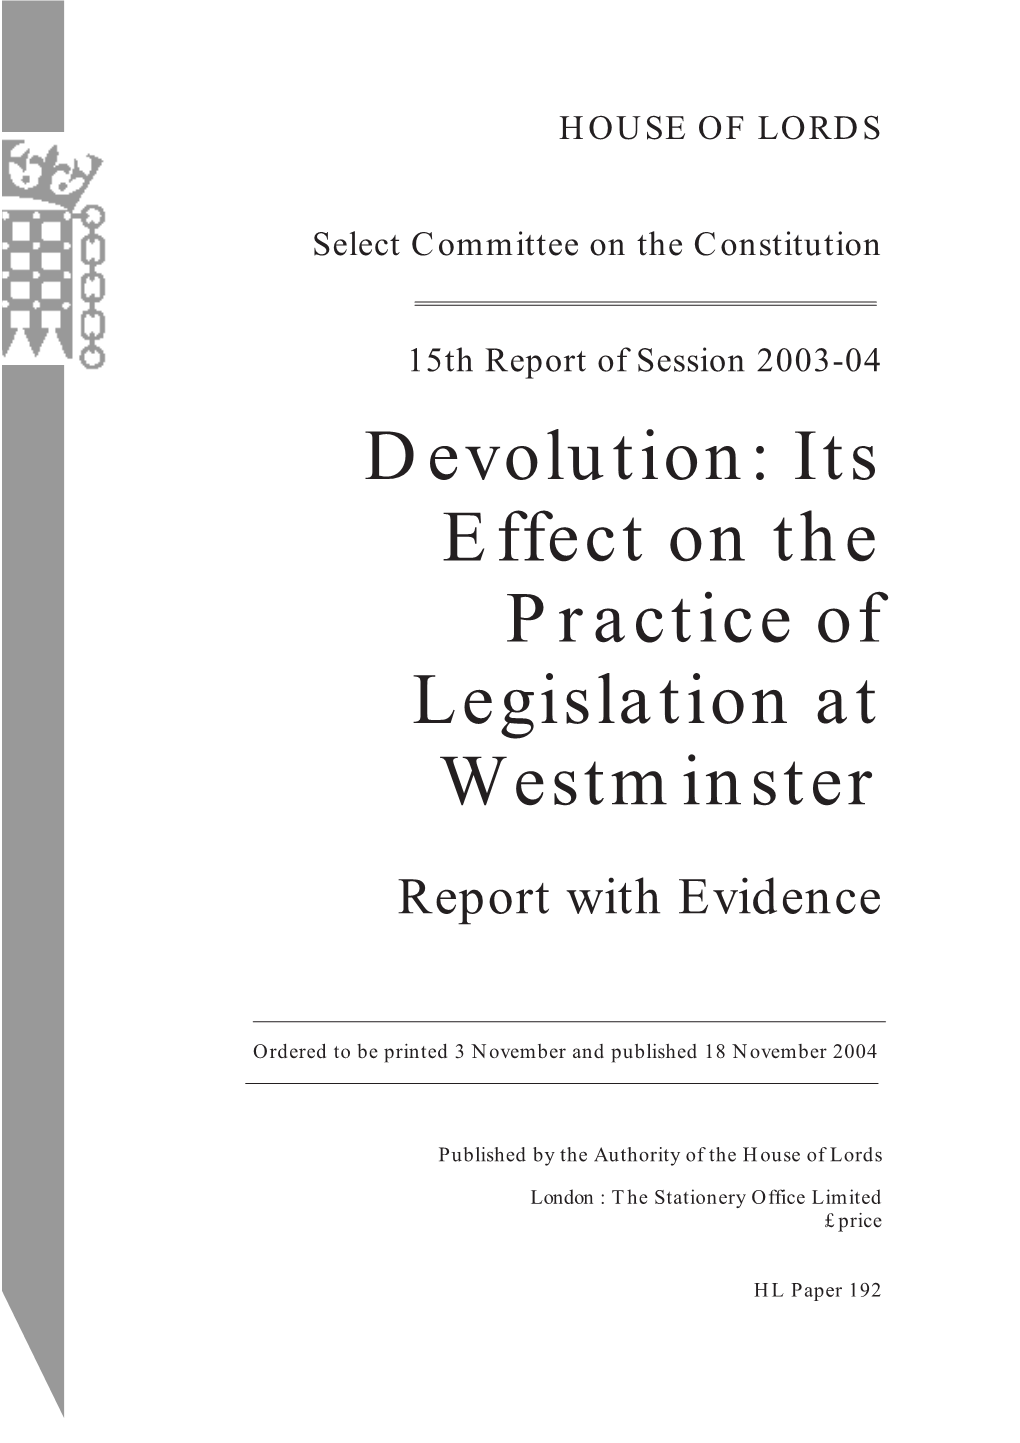 Devolution: Its Effect on the Practice of Legislation at Westminster